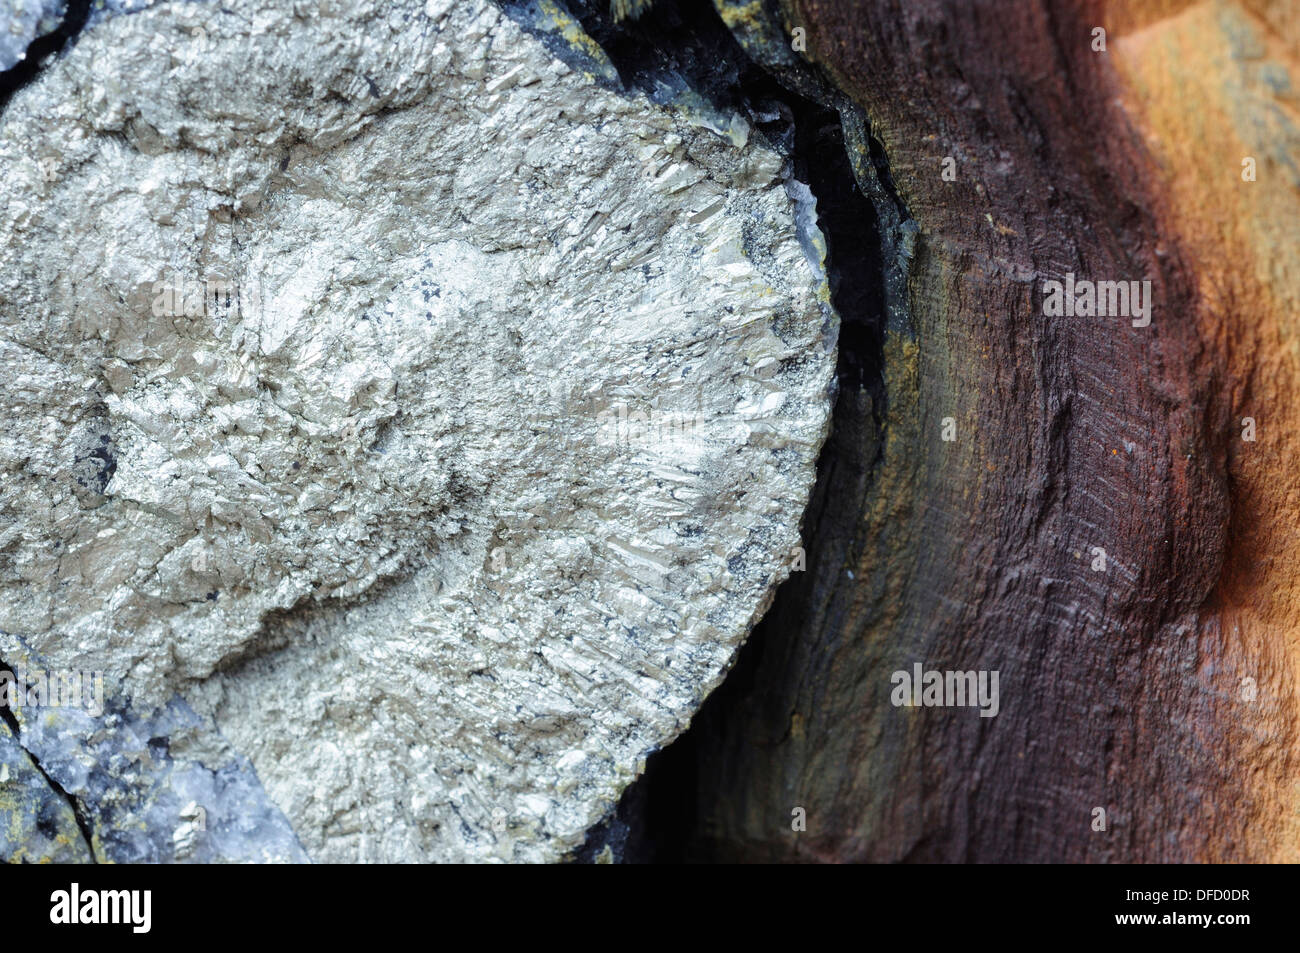 Mineral seams in stone Stock Photo